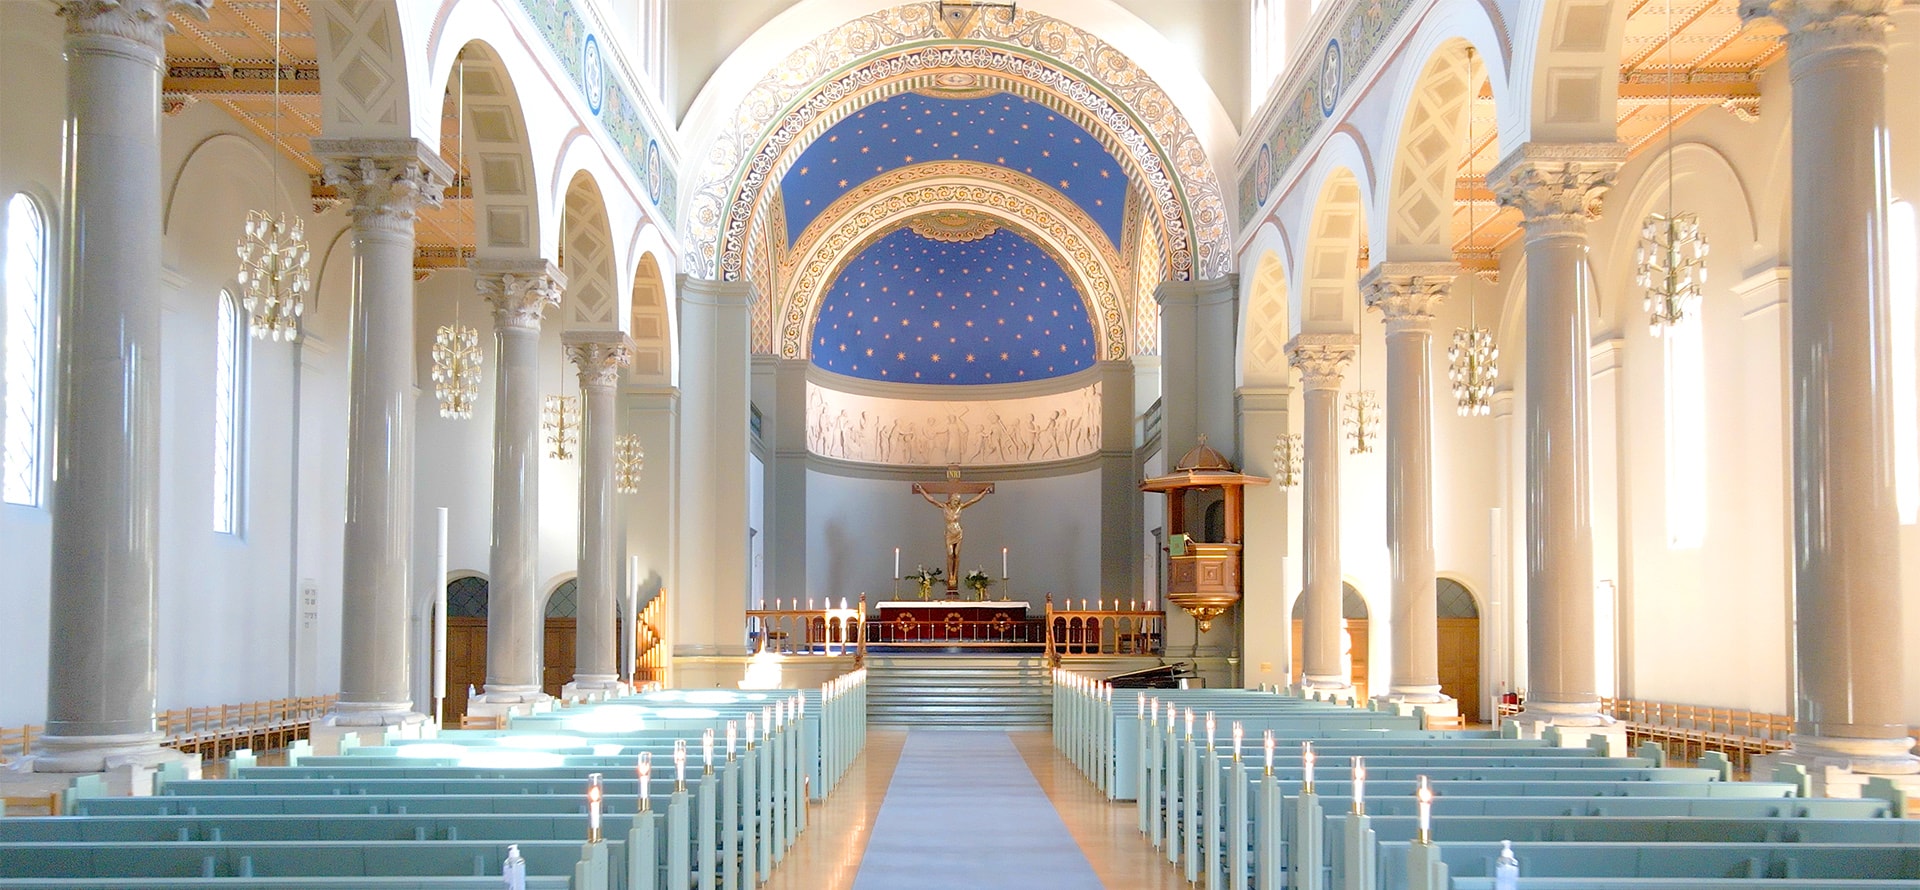 Sankt Paul's church interior